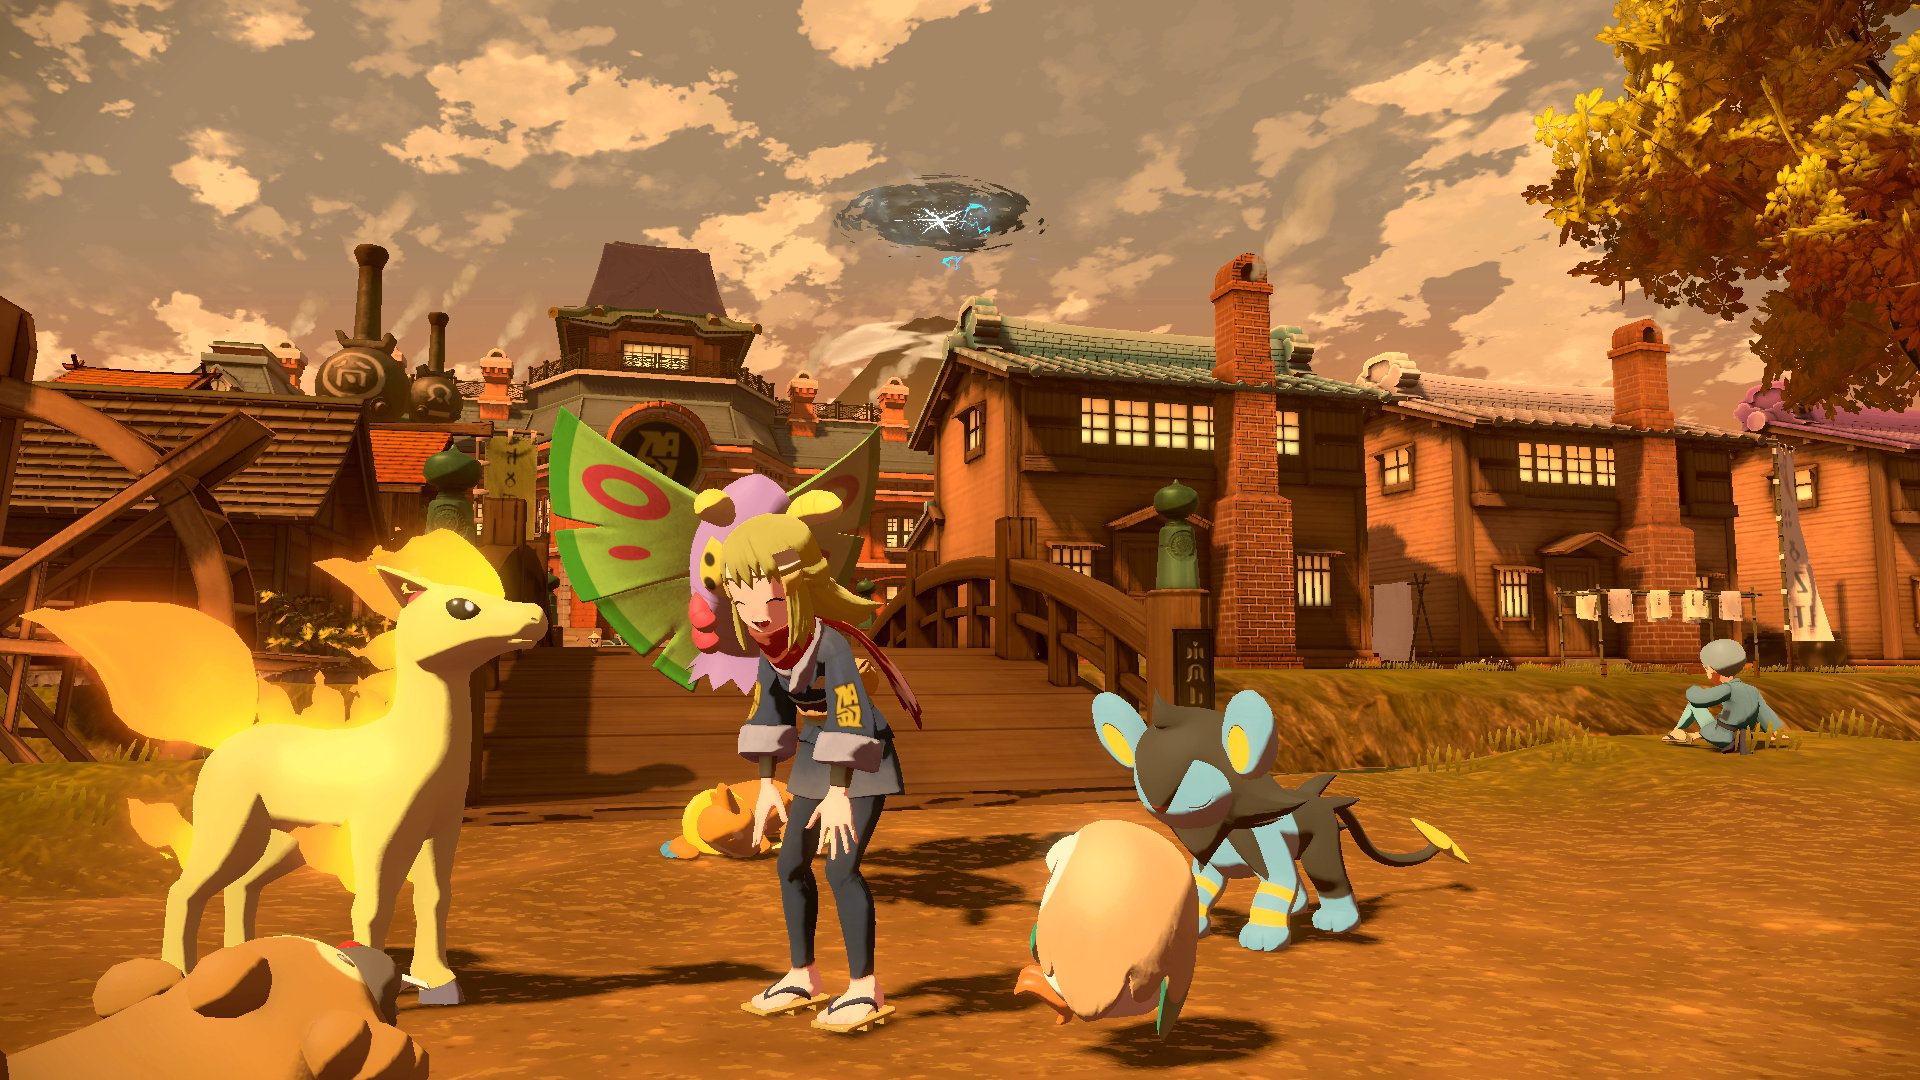 Pokémon Revolution Online  24 Days of MMO Games - Day 19 🔴 Livestream 